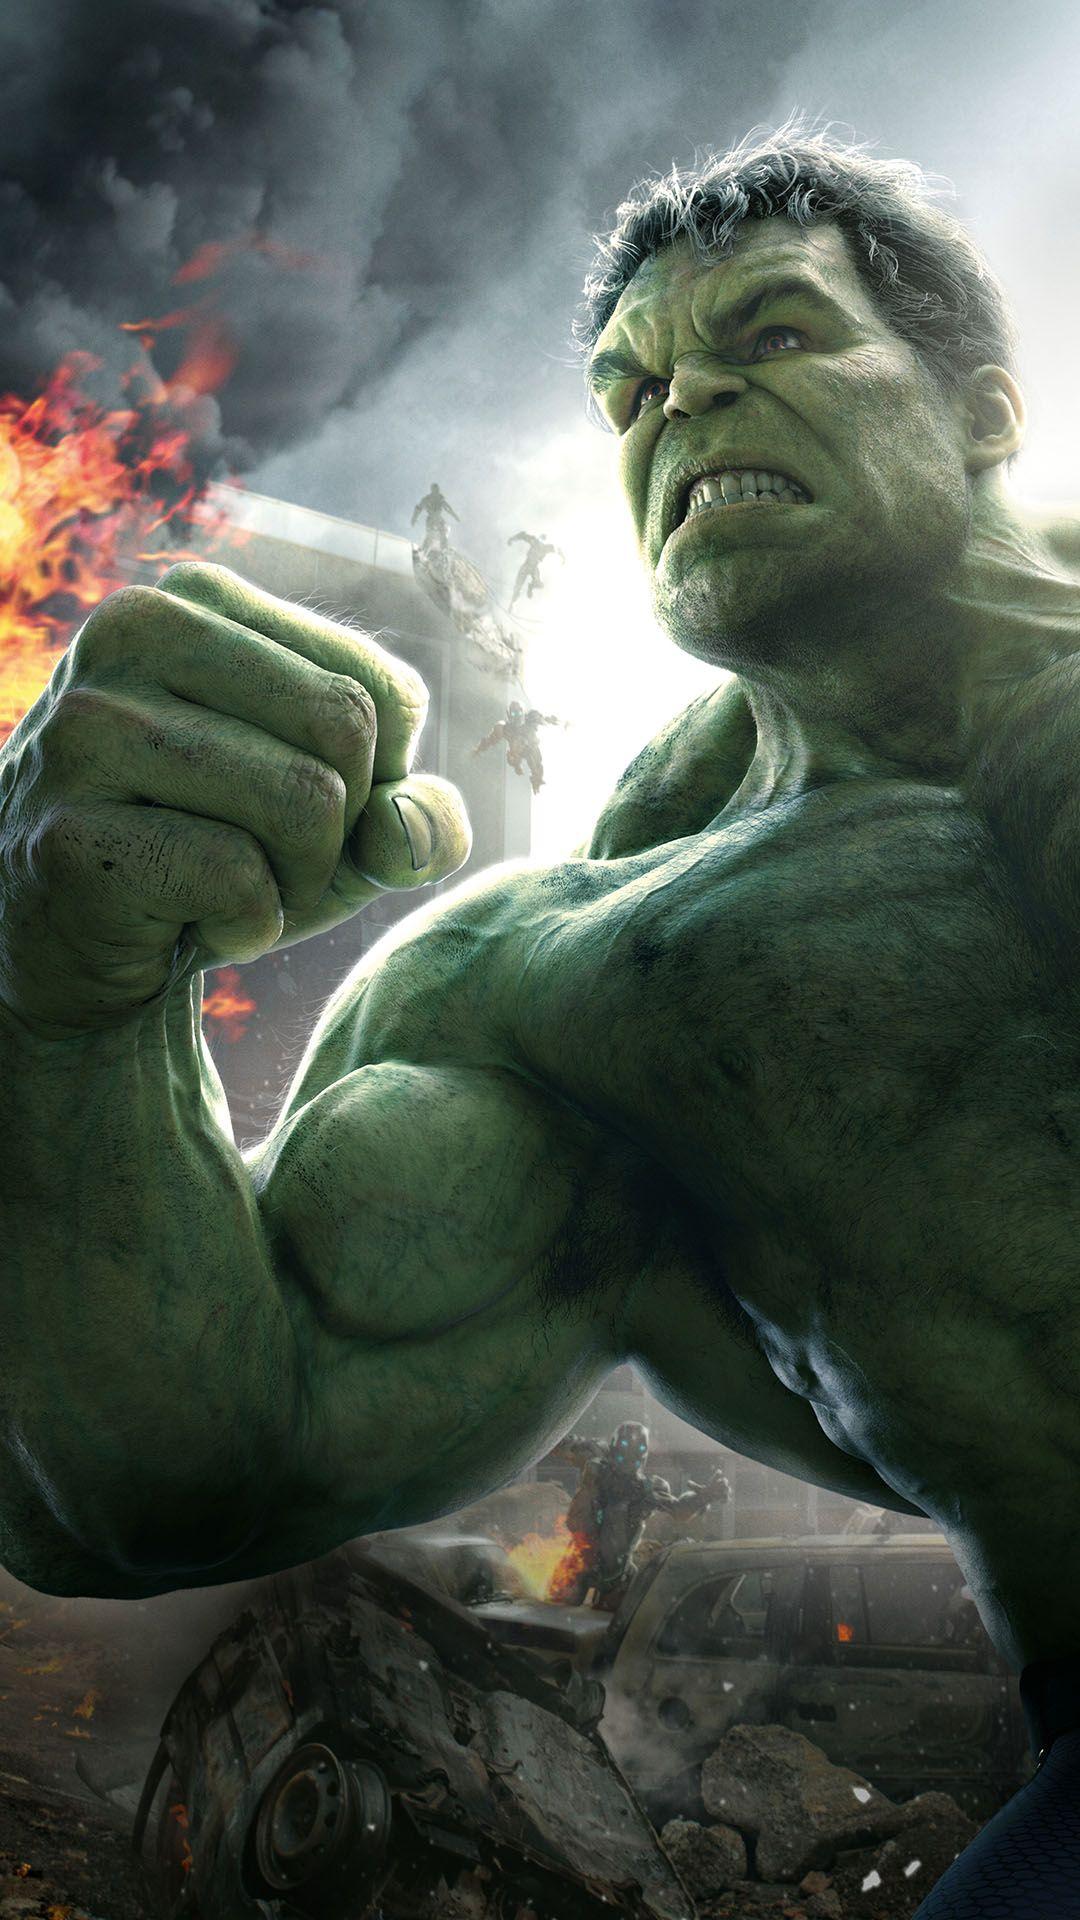 35 Gambar Wallpaper Hd Android Hulk terbaru 2020